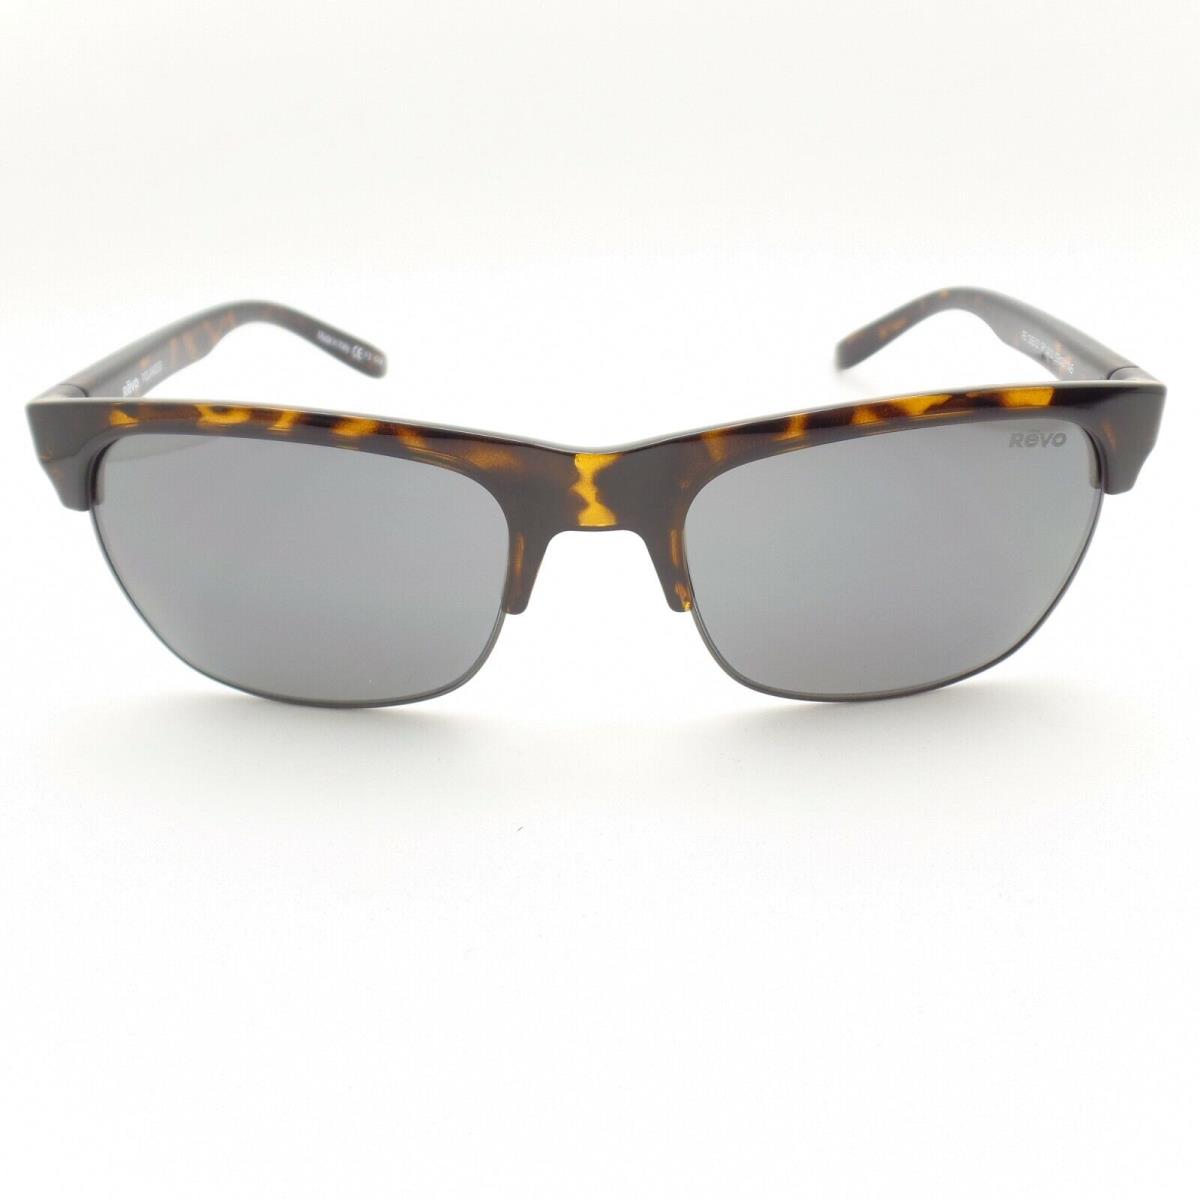 Revo sunglasses  - Tortoise Gun Frame, Graphite Mirror Lens